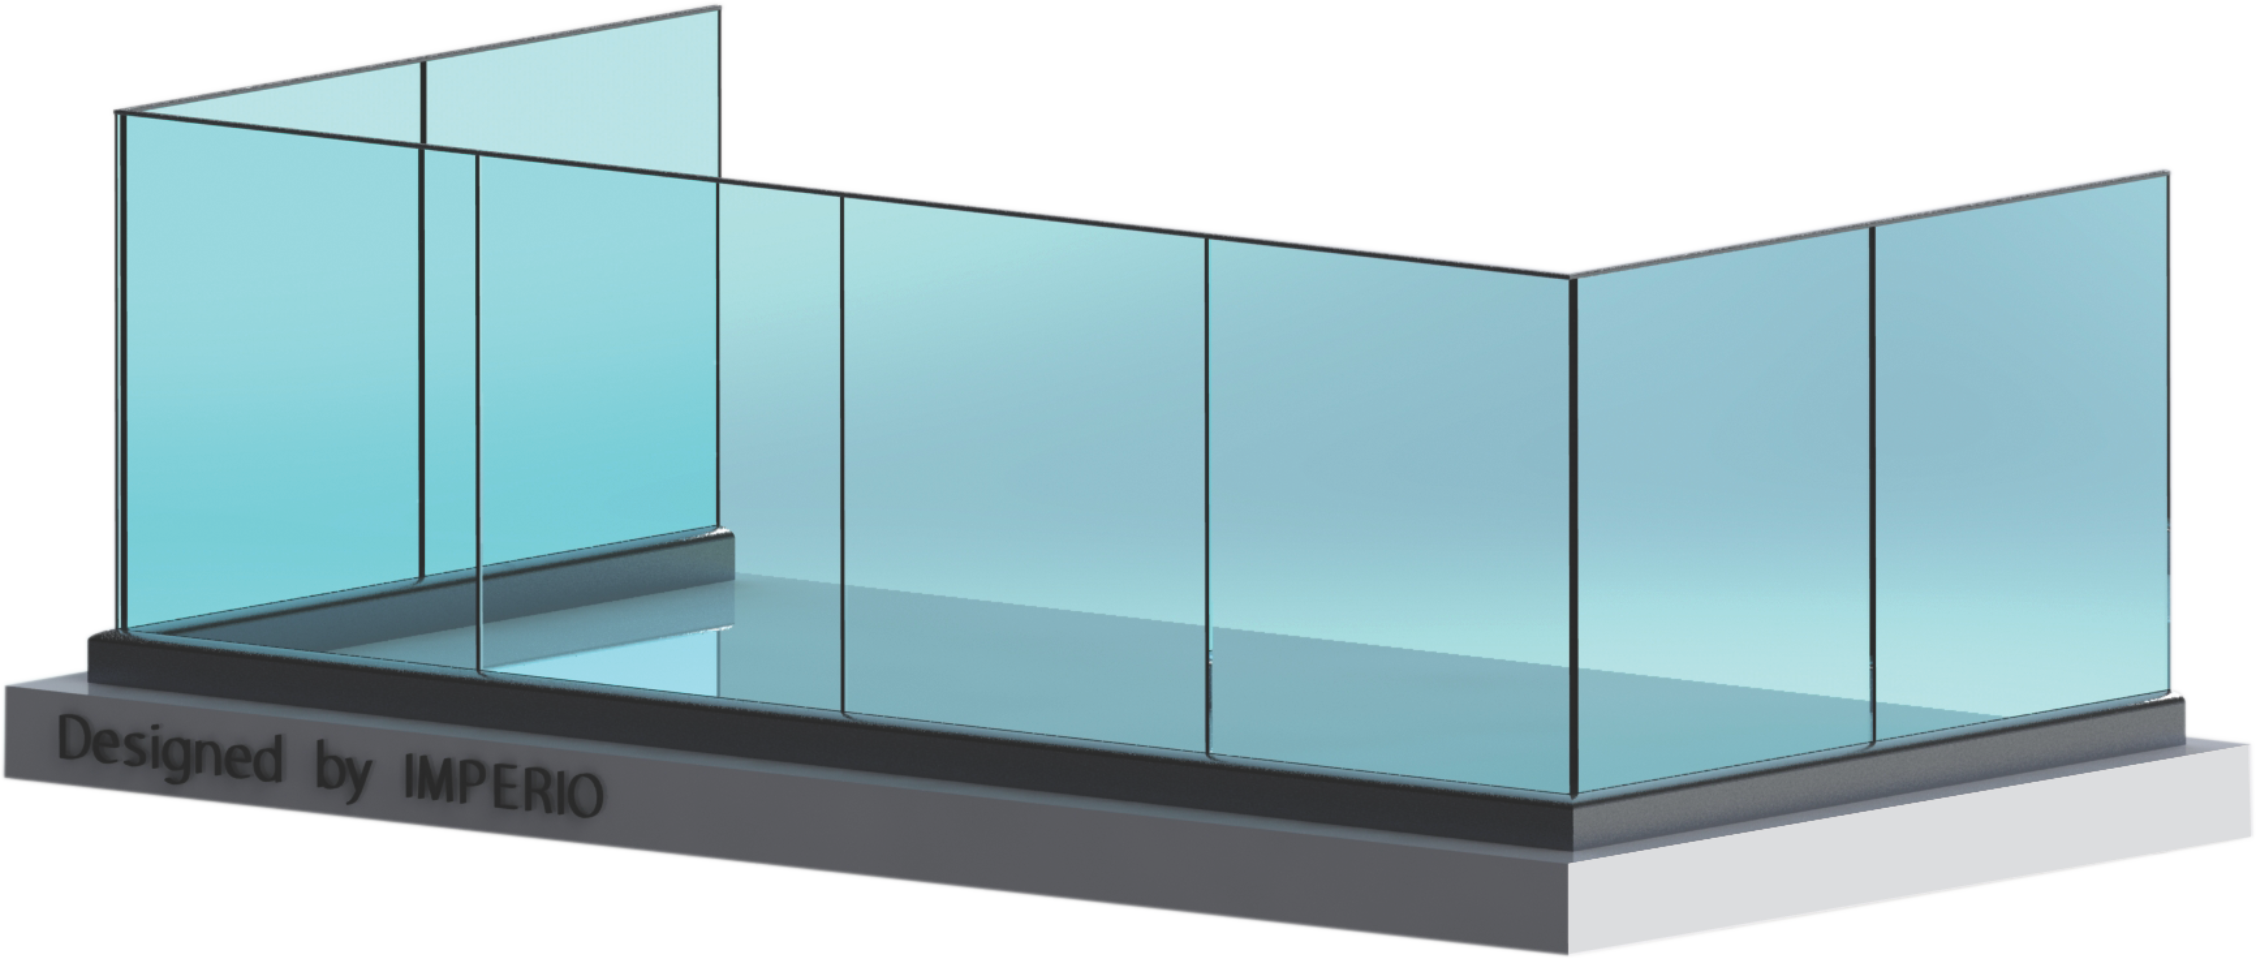 Imperio A series Framless Glass Railings